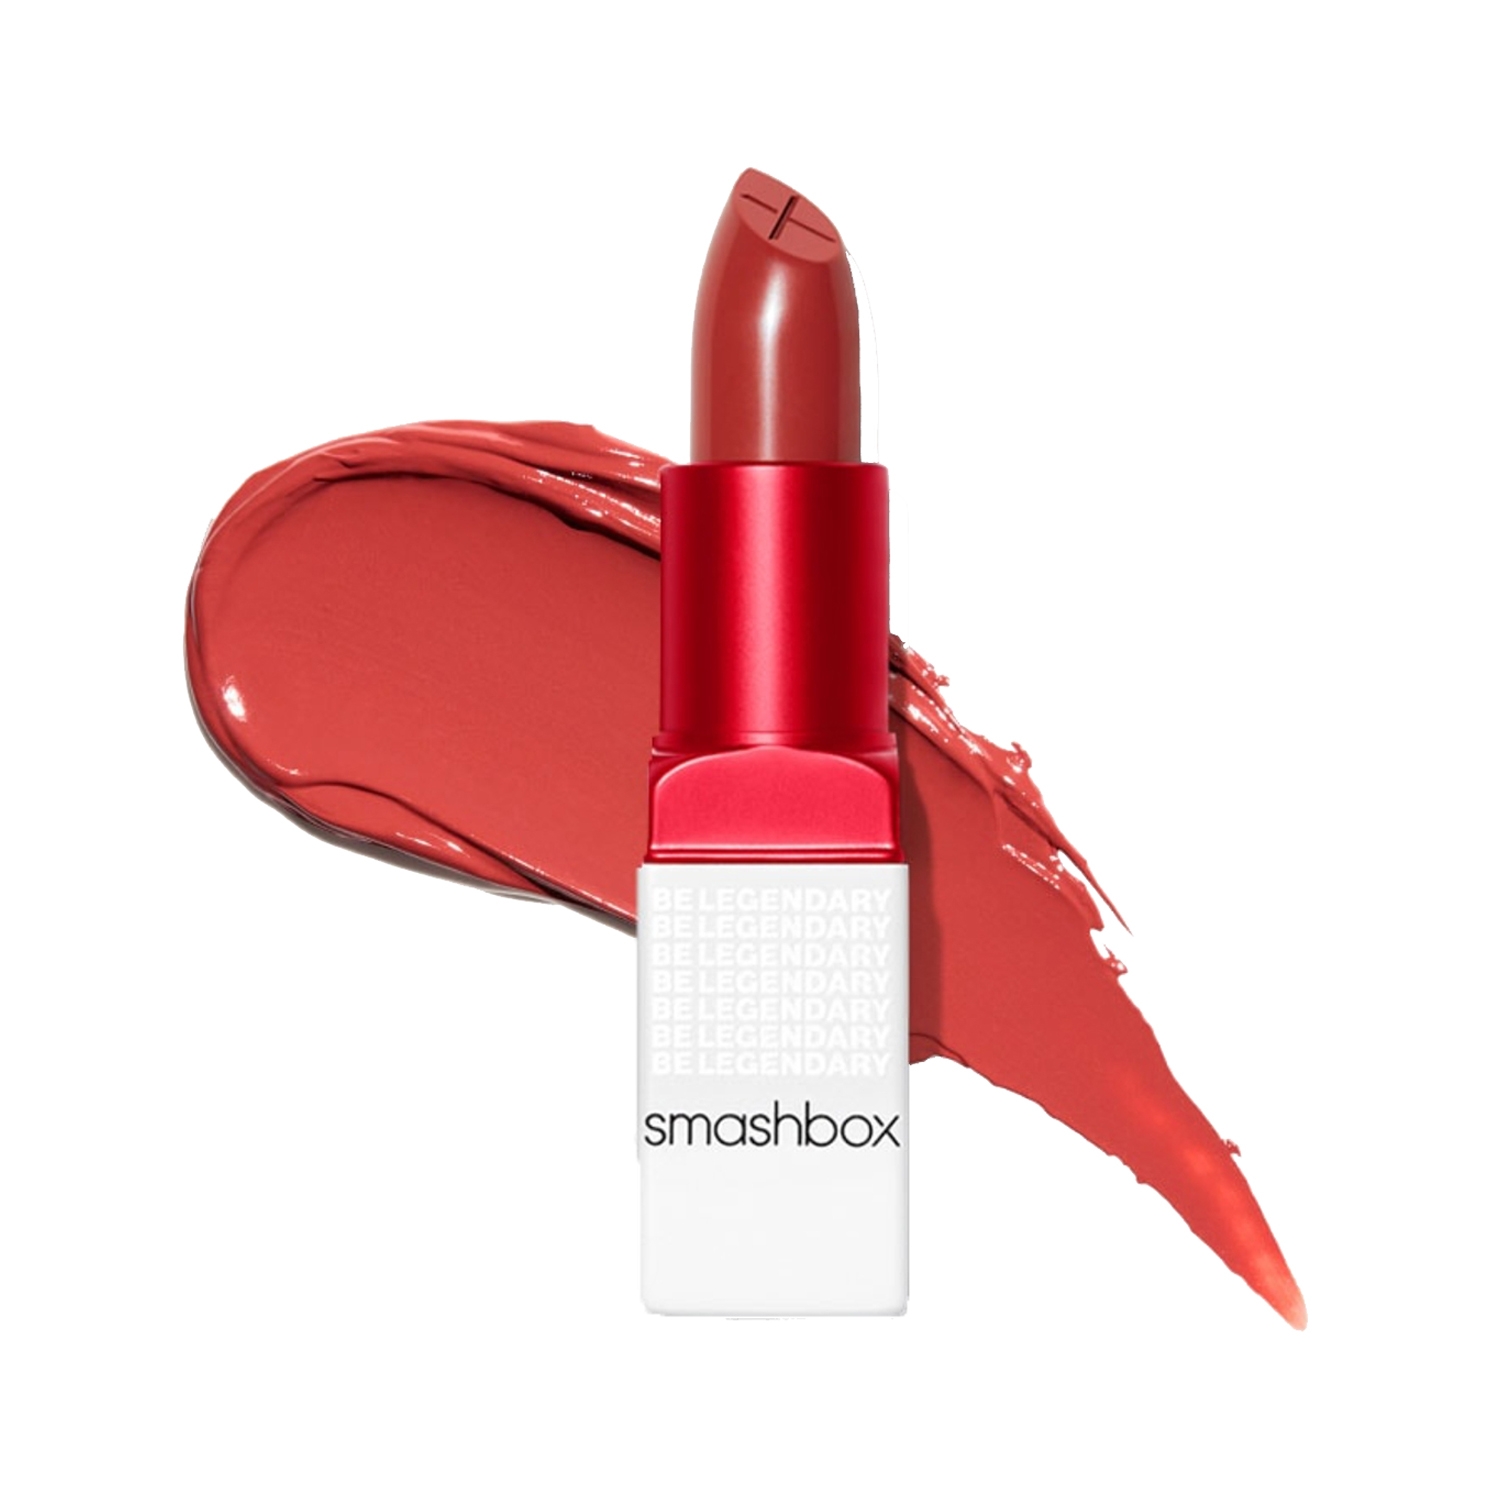 Smashbox | Smashbox Be Legendary Prime & Plush Lipstick - Neutral Coral (3.4g)